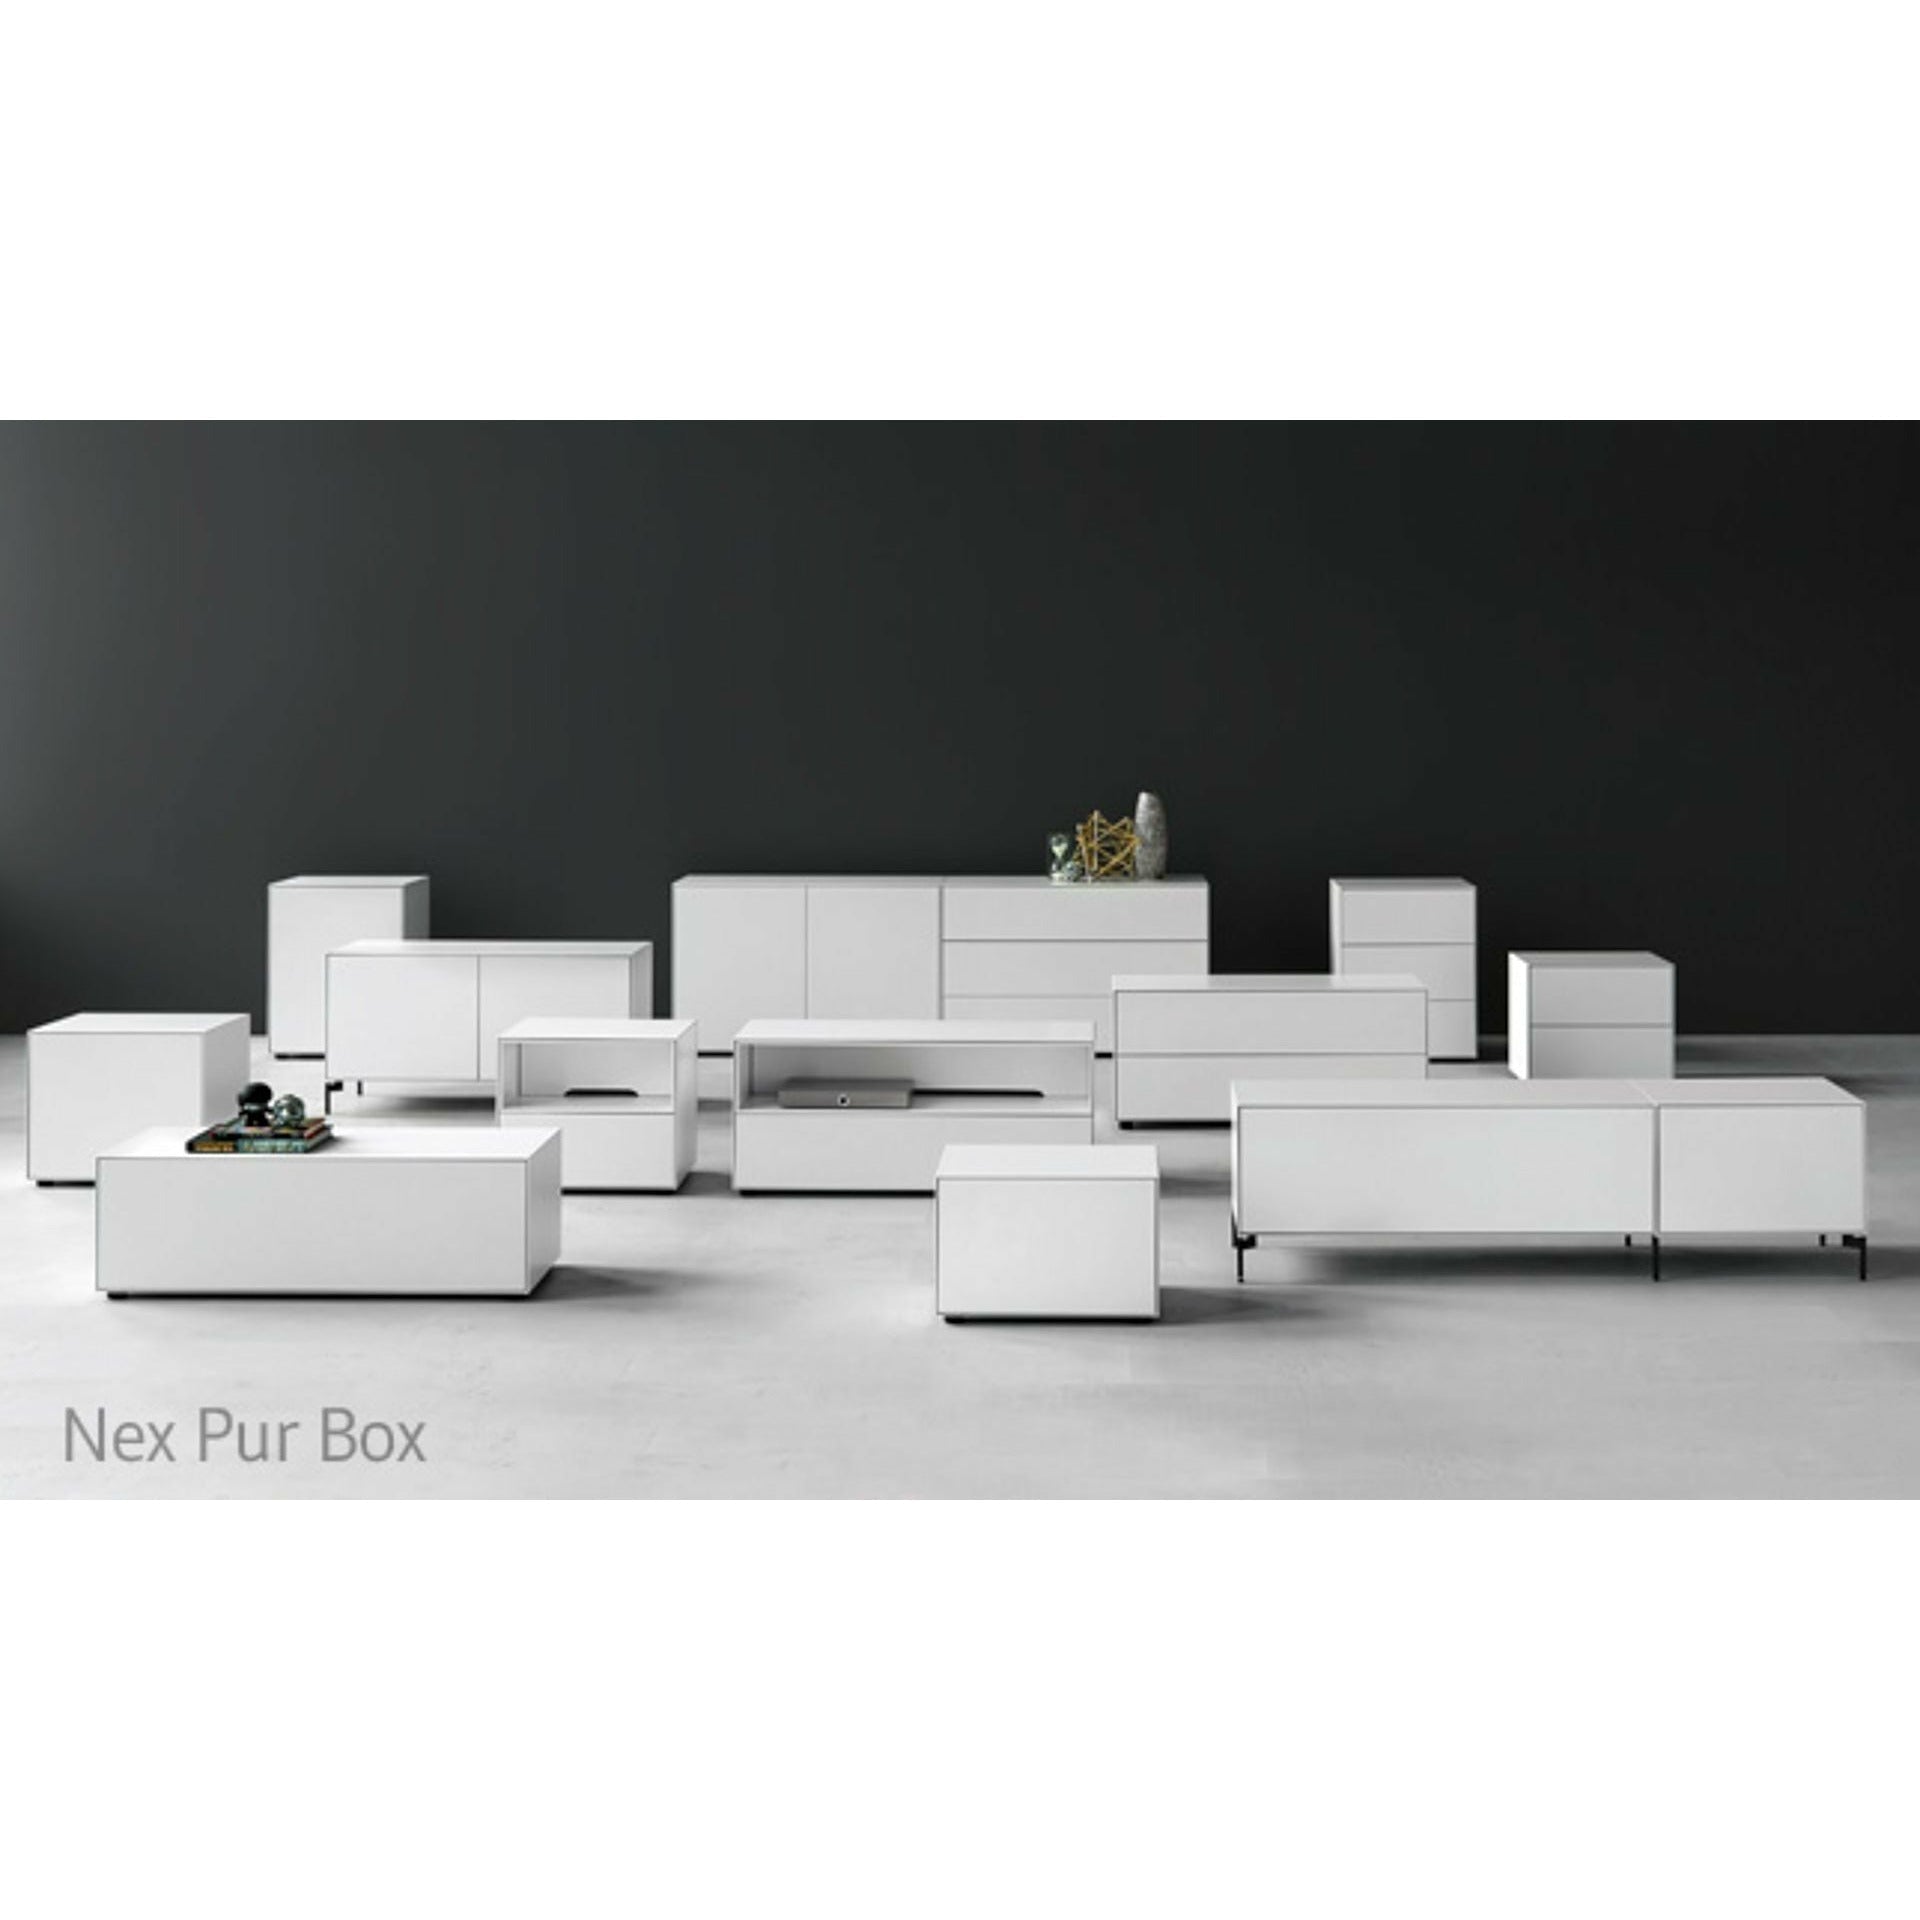 Piure Nex Pur Box Drawer HxB 50x120 Cm, 2 Skuffer